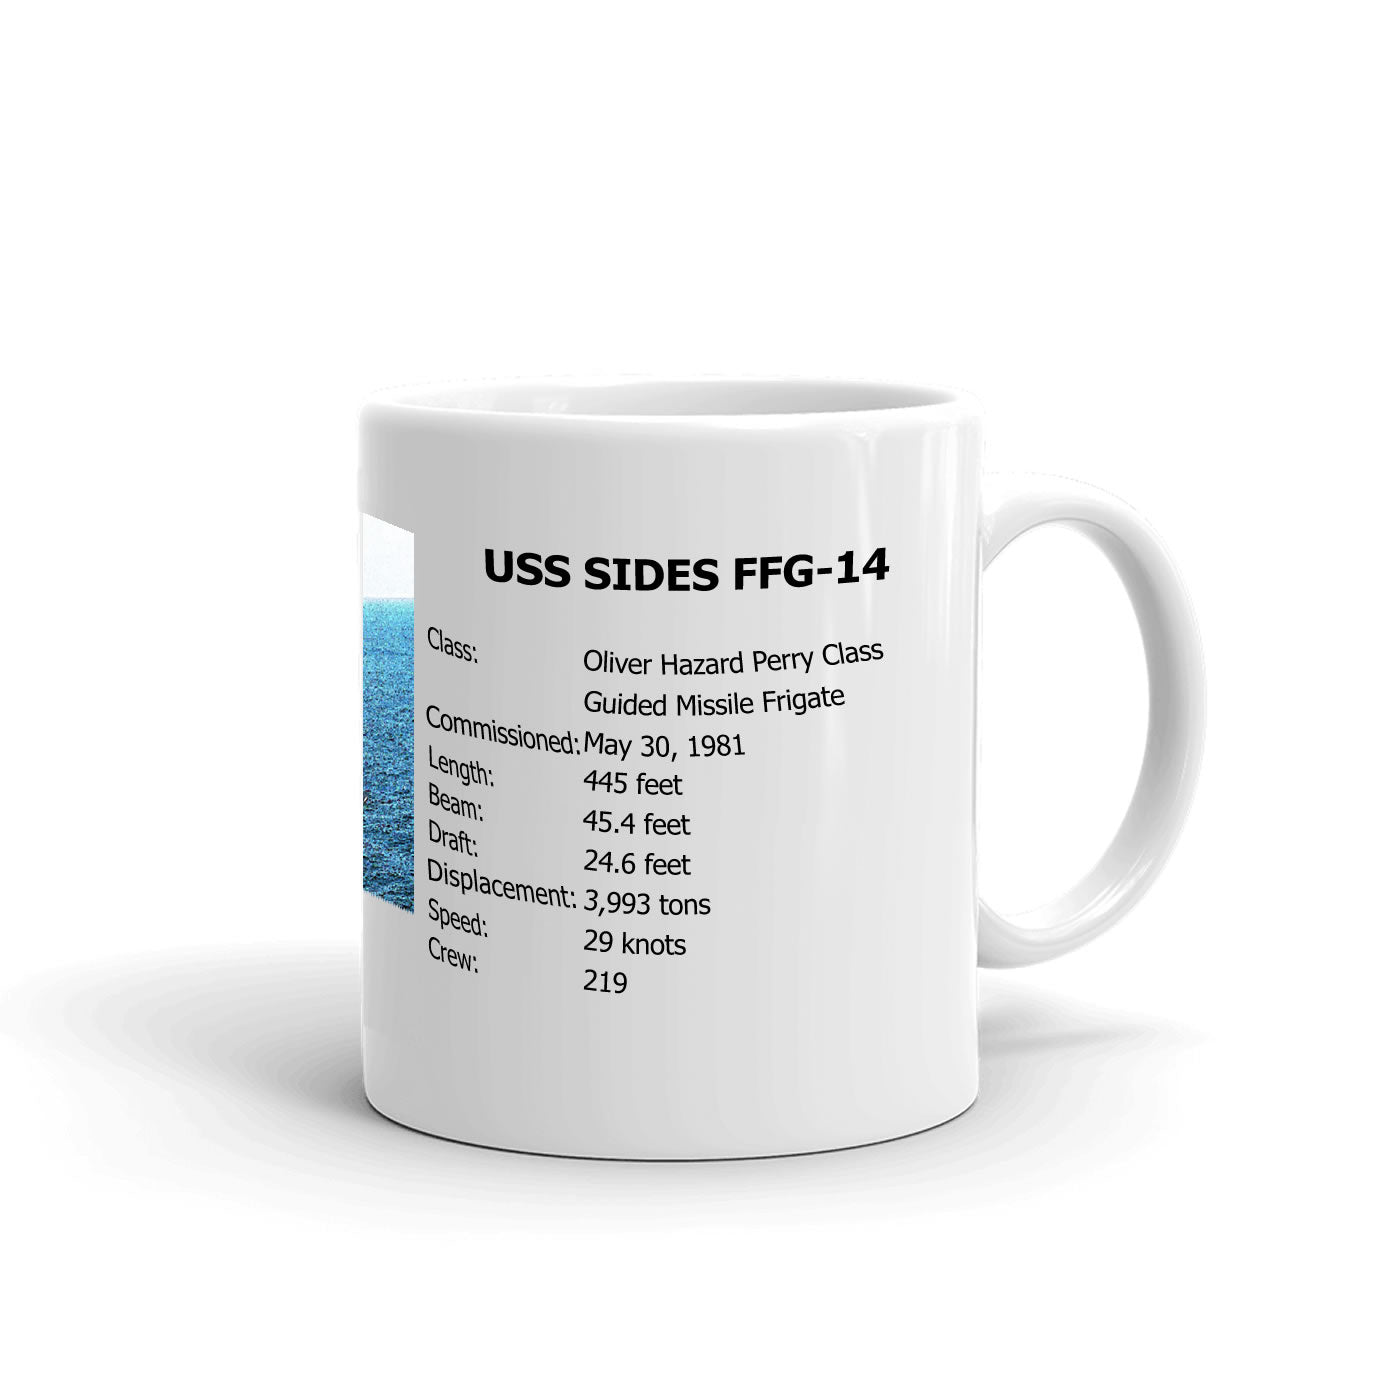 USS Sides FFG-14 Coffee Cup Mug Right Handle